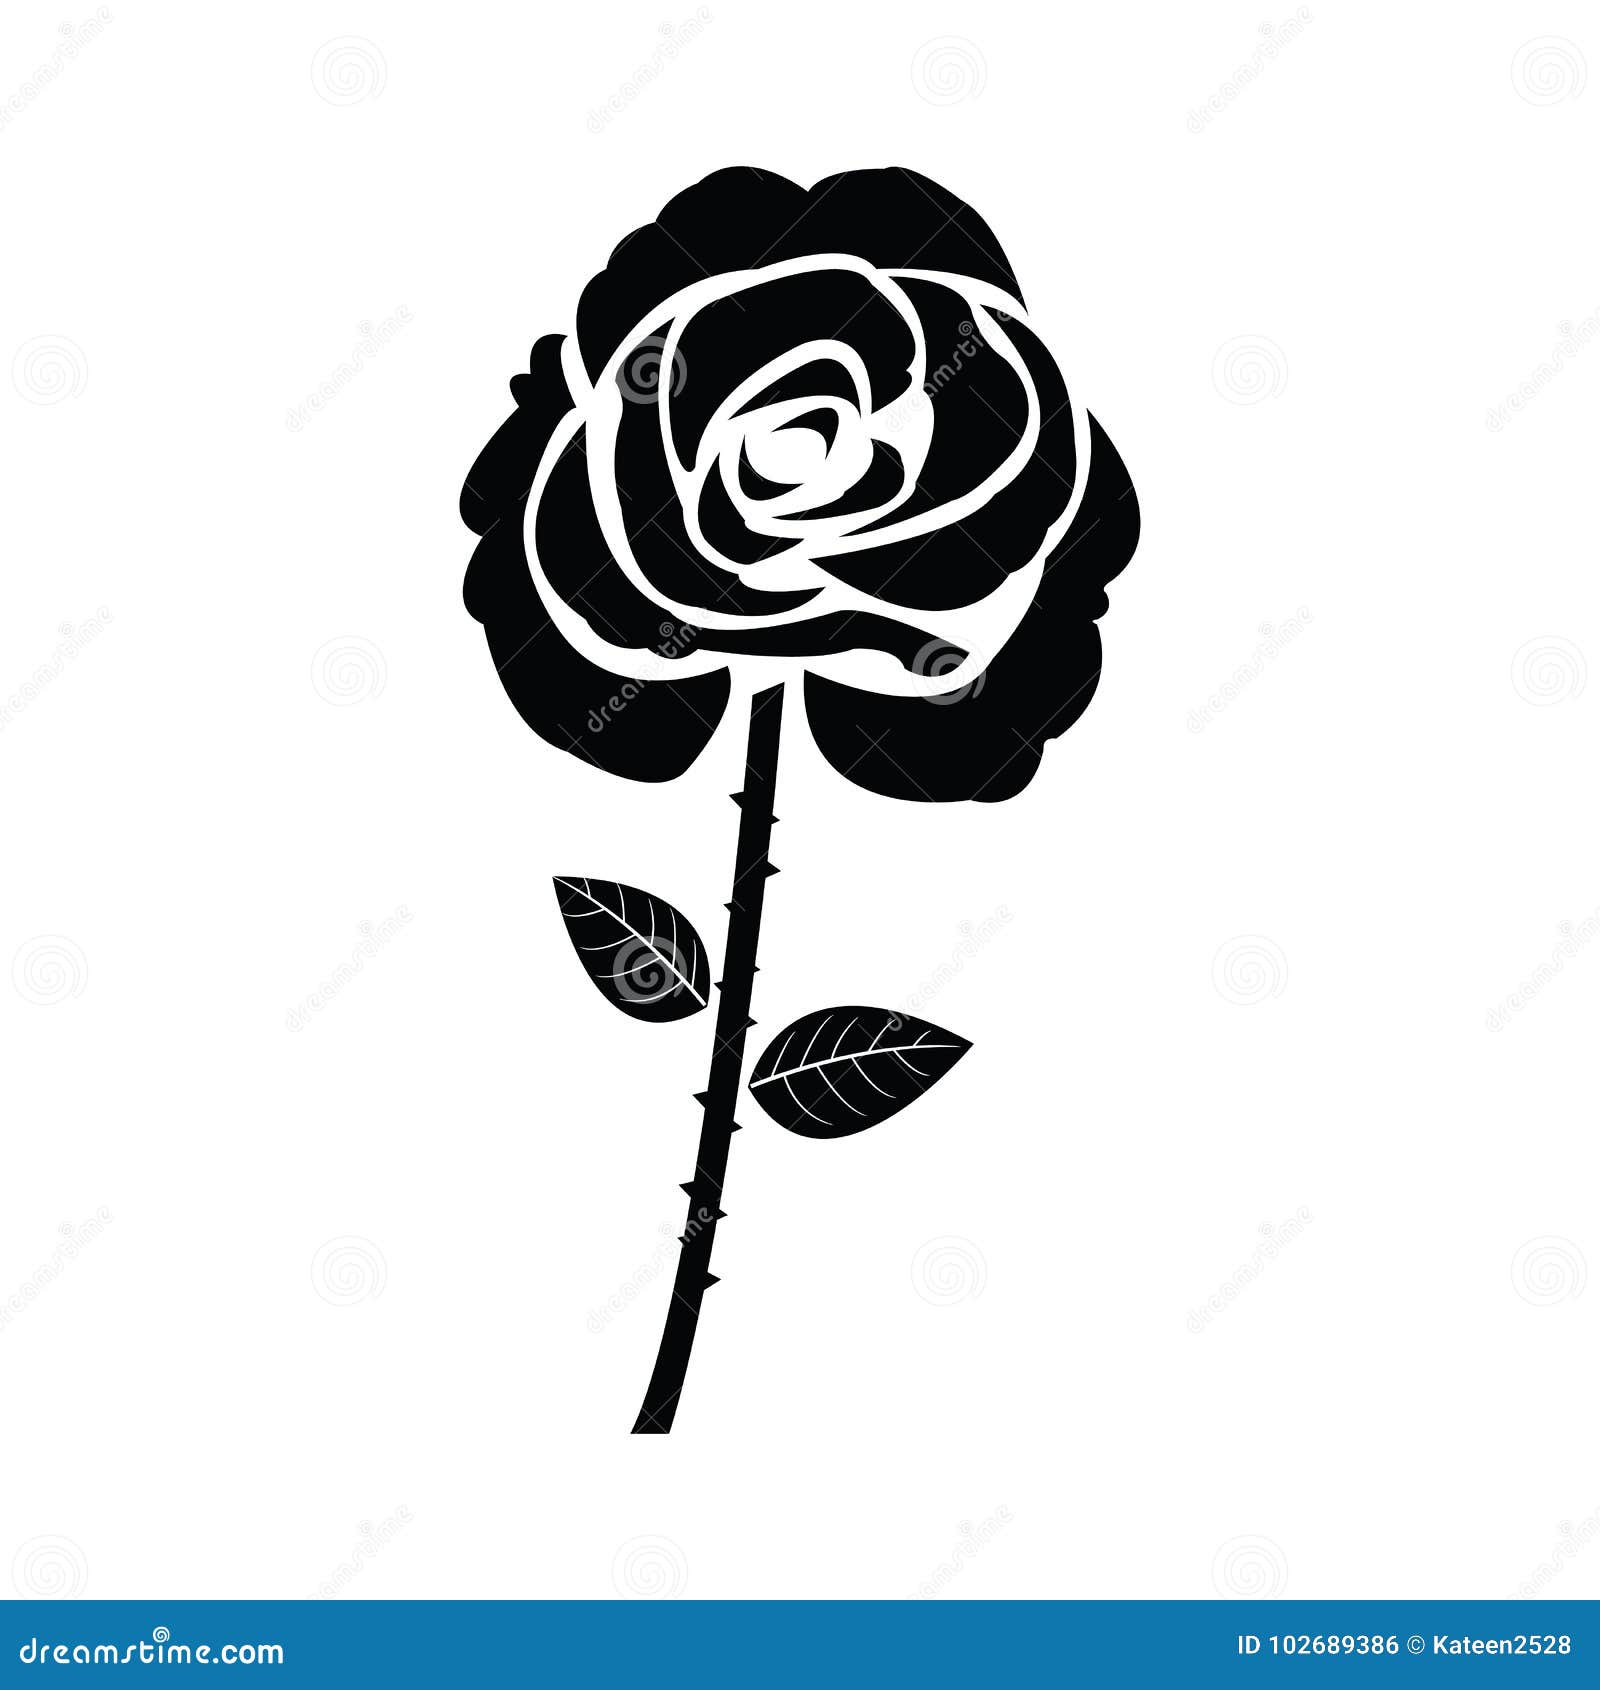 Black silhouette of rose stock illustration. Illustration of beautiful ...